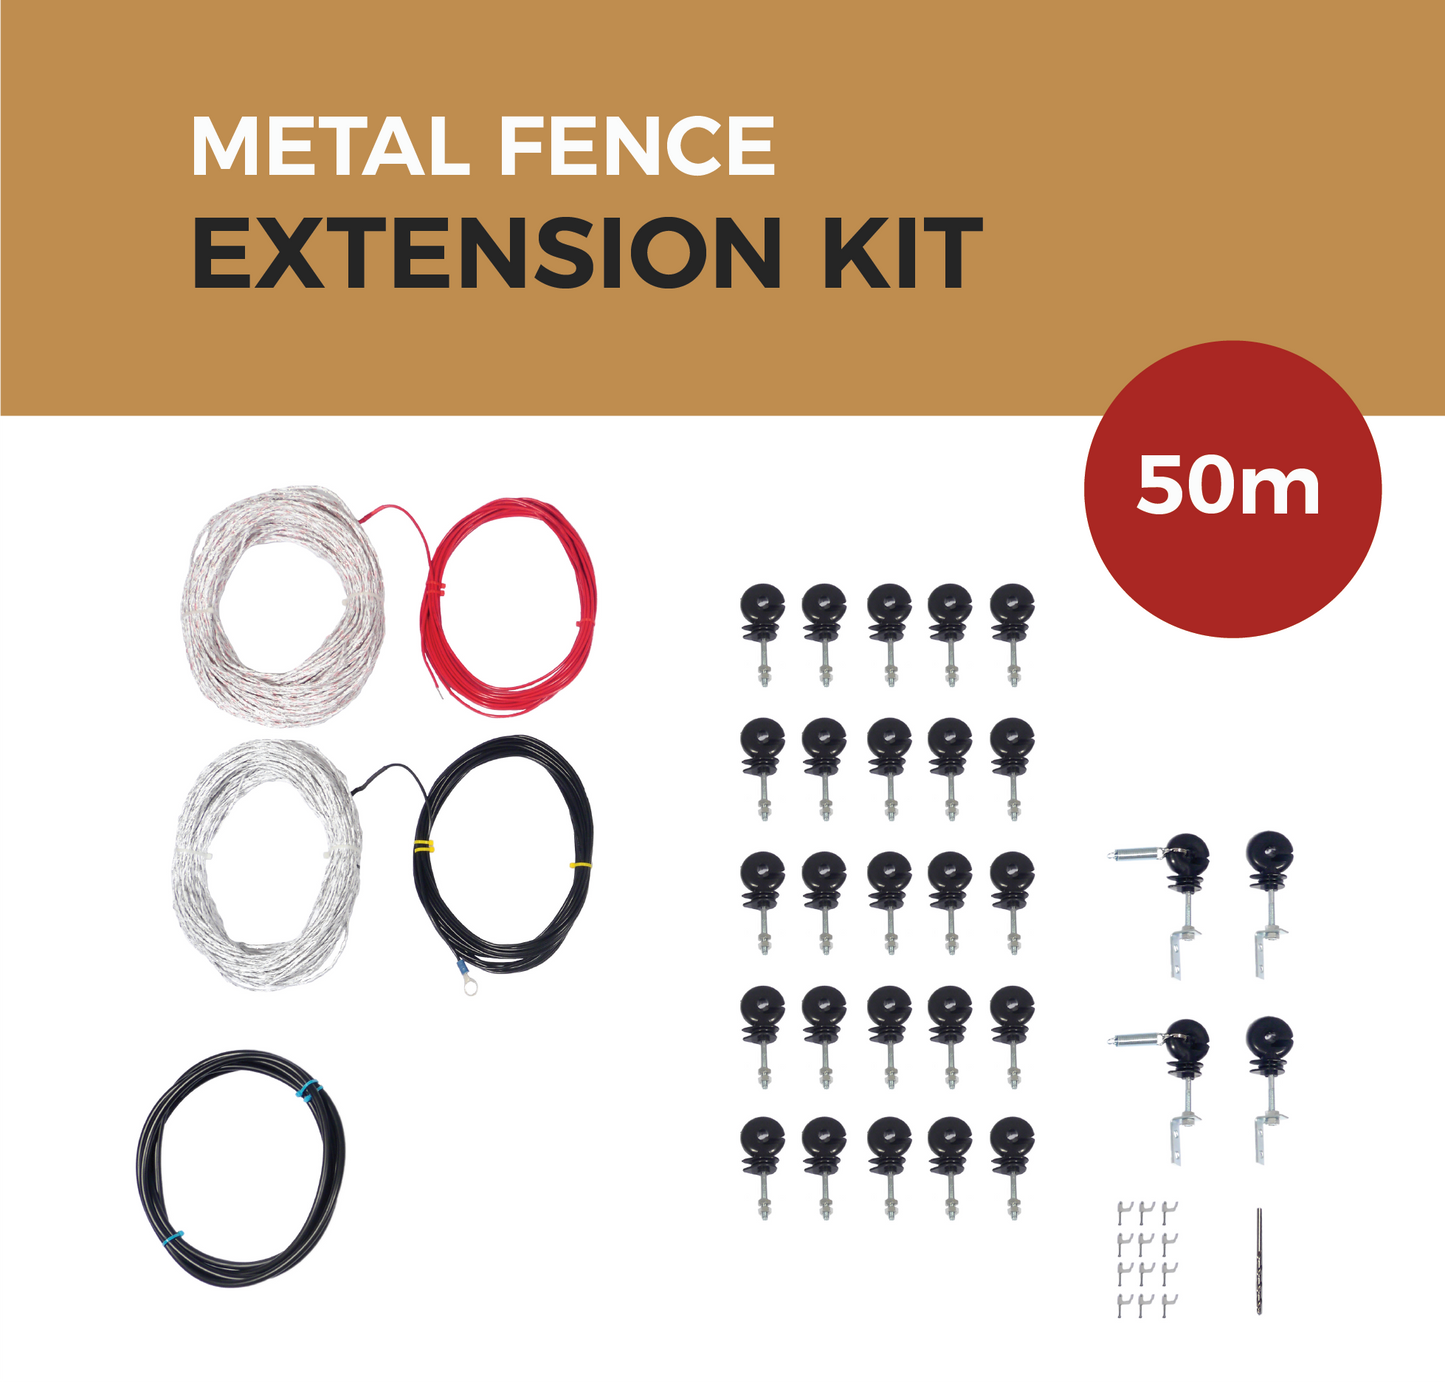 Cat Proof Fence 50m Extension Kit - Metal Fences | SmartCatsStayHome